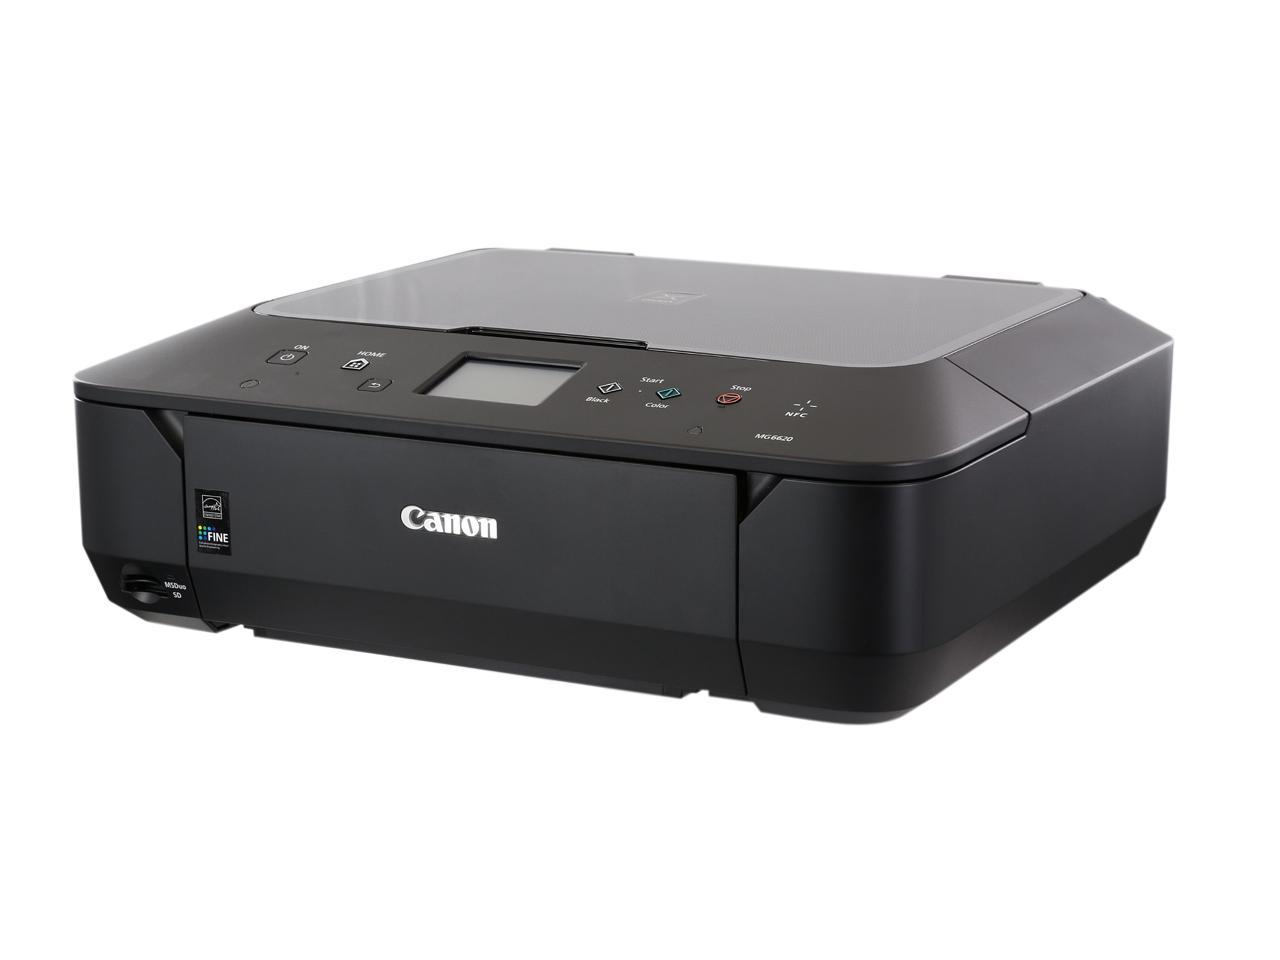 Canon Mg6620 Printer Software Download Mac Sierra